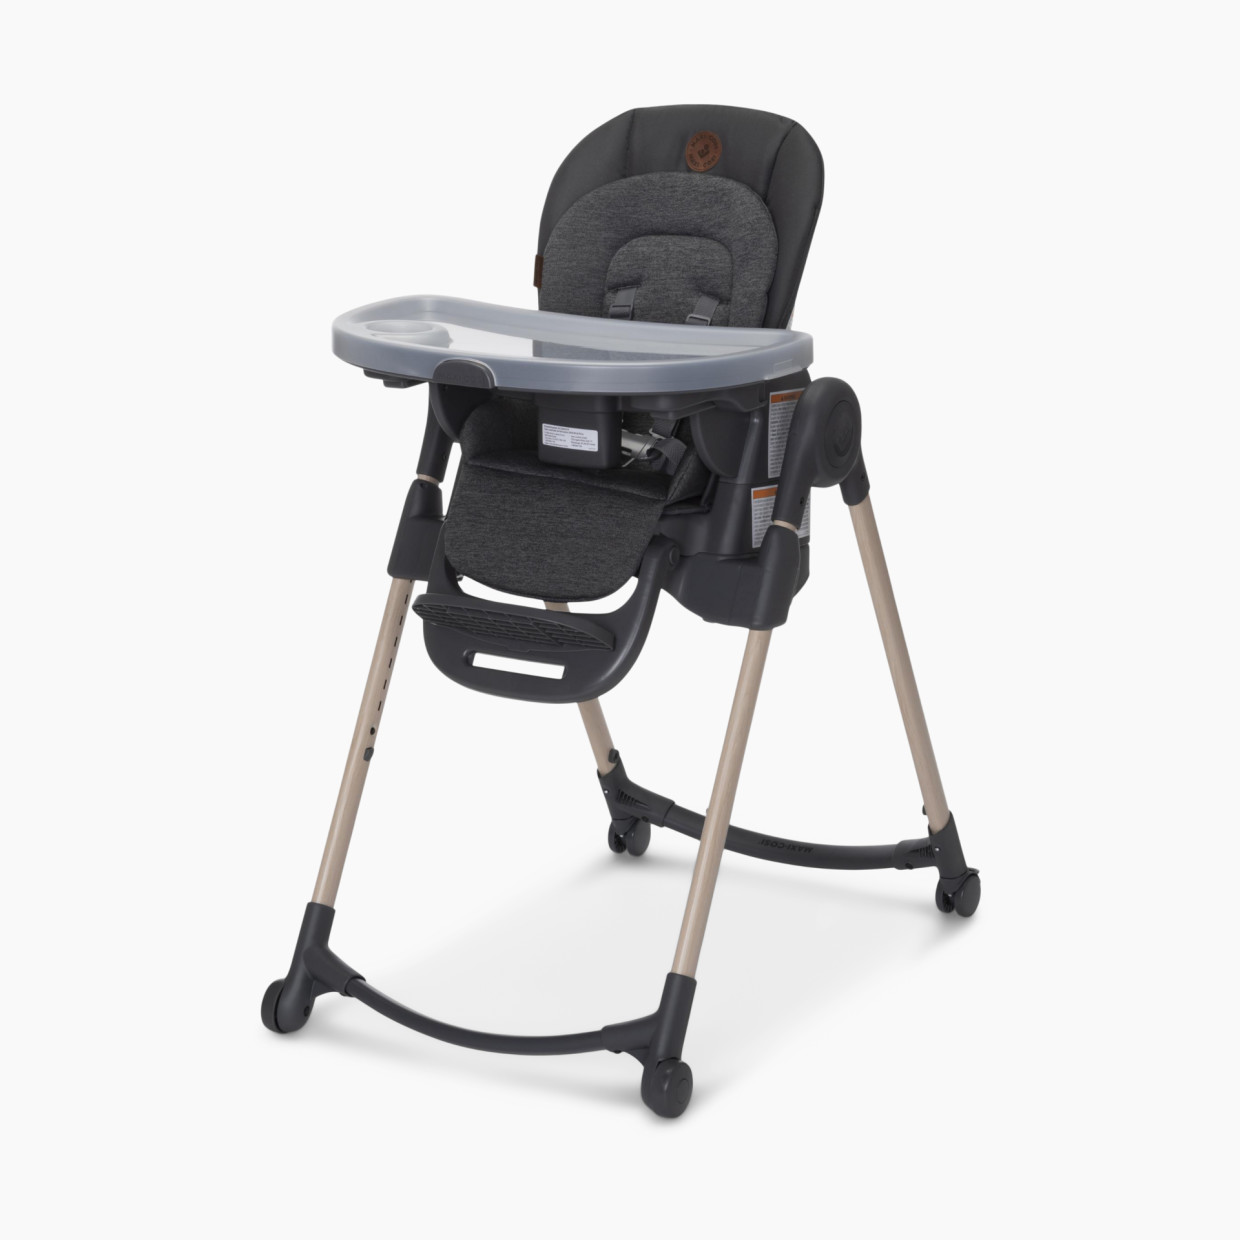 Maxi-Cosi Minla 6-in-1 Adjustable High Chair - Classic Graphite.